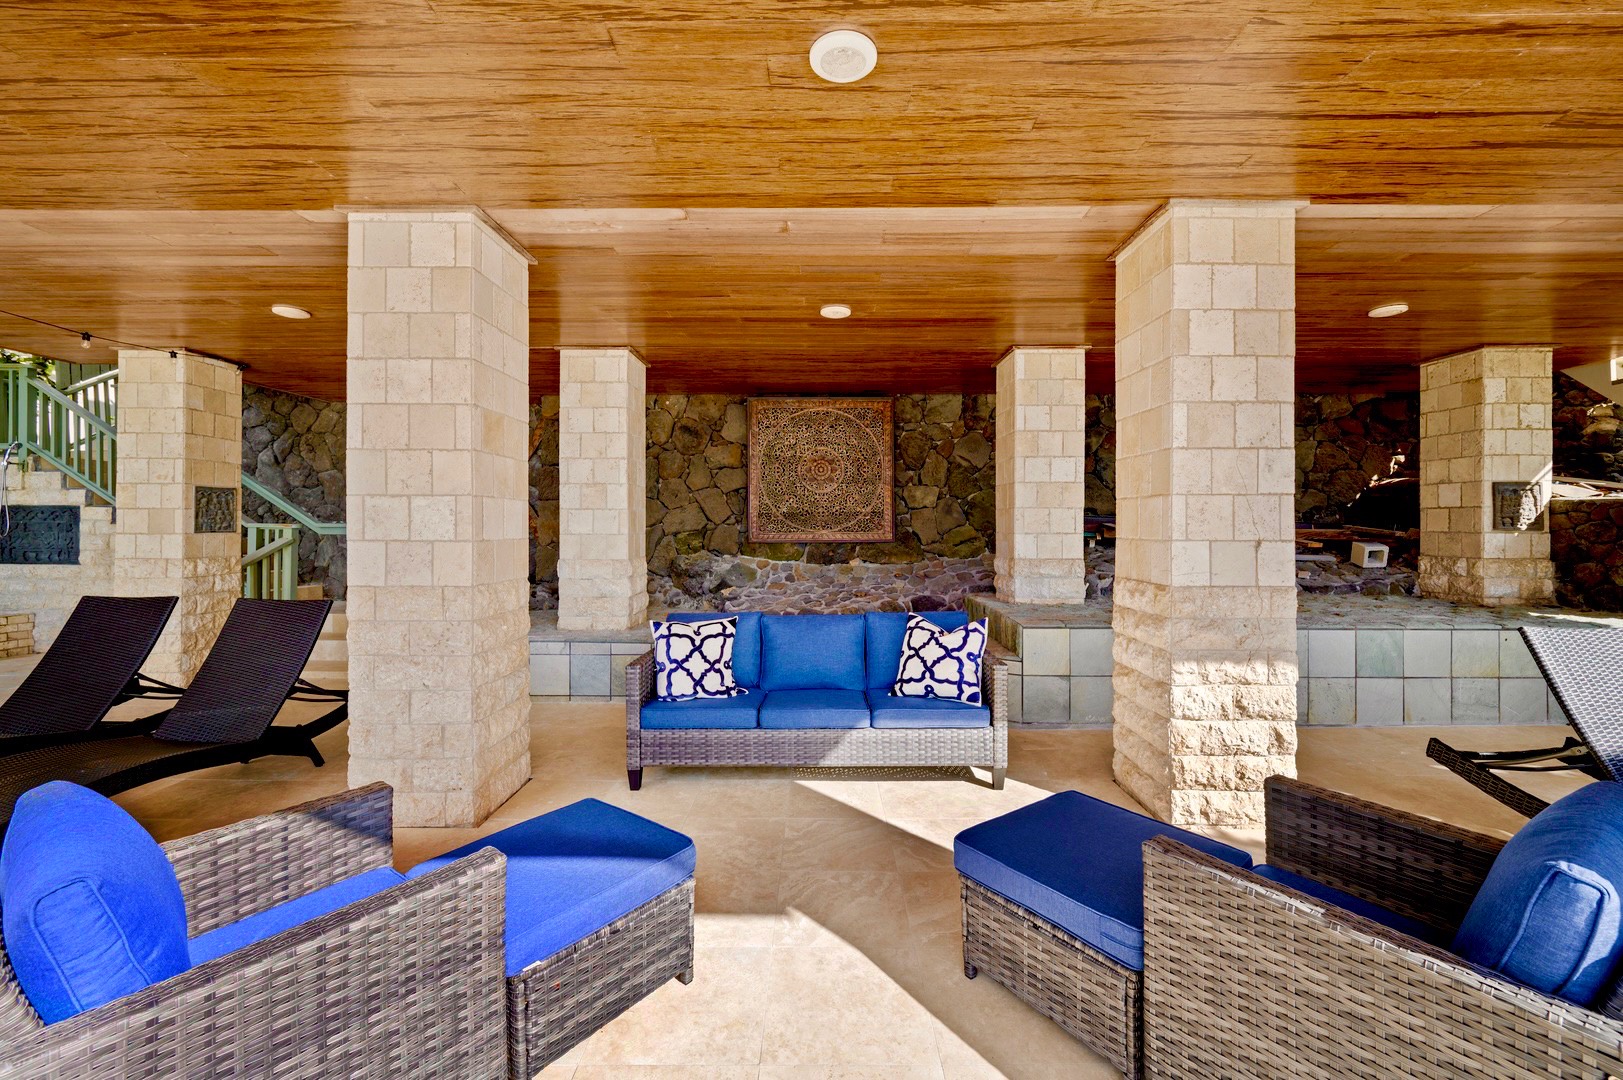 Honolulu Vacation Rentals, Kaiko'o Villa* - Beautiful outdoor space to lounge